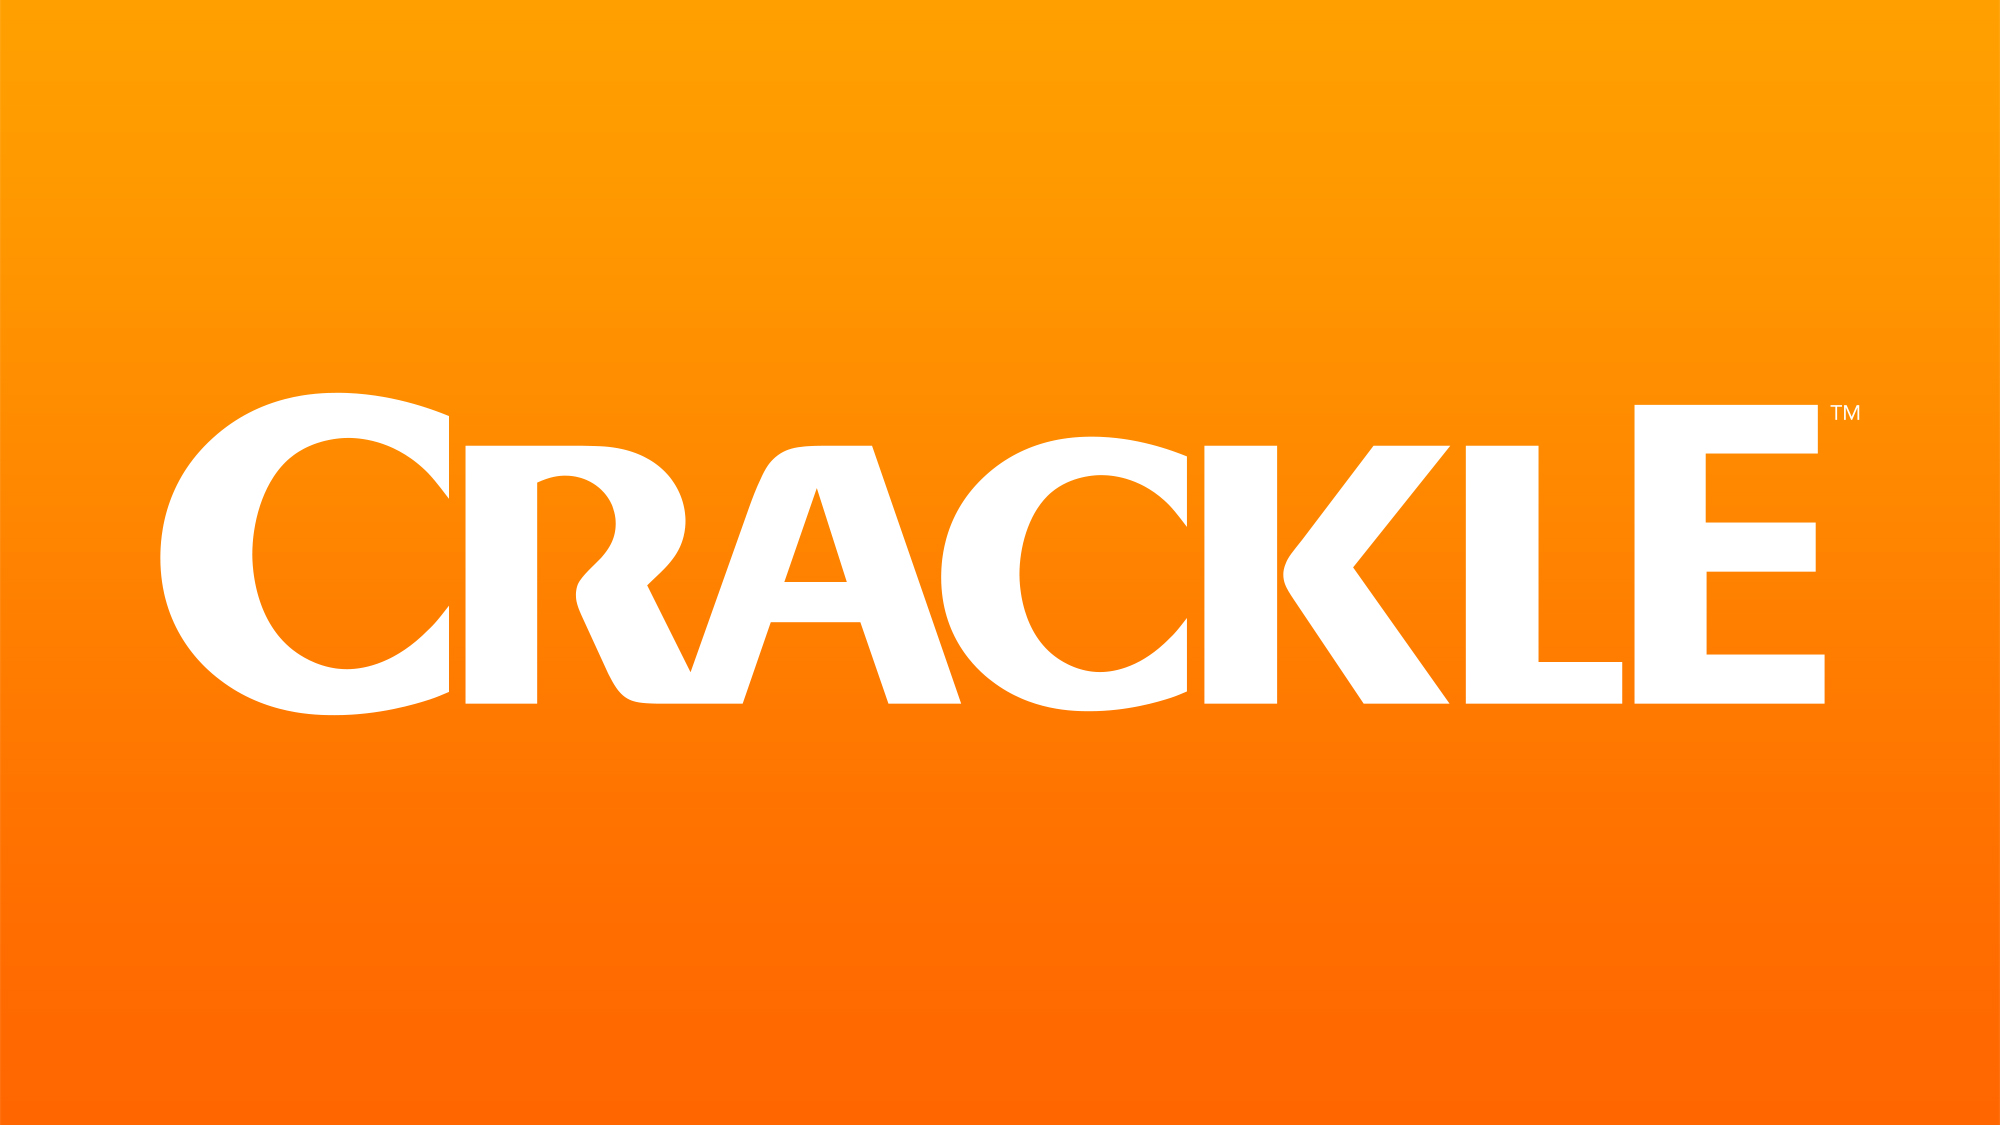 crackle-orange-logo.jpg